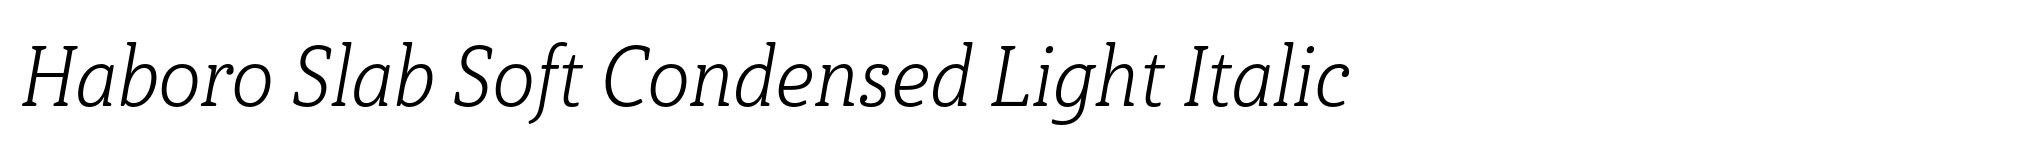 Haboro Slab Soft Condensed Light Italic image